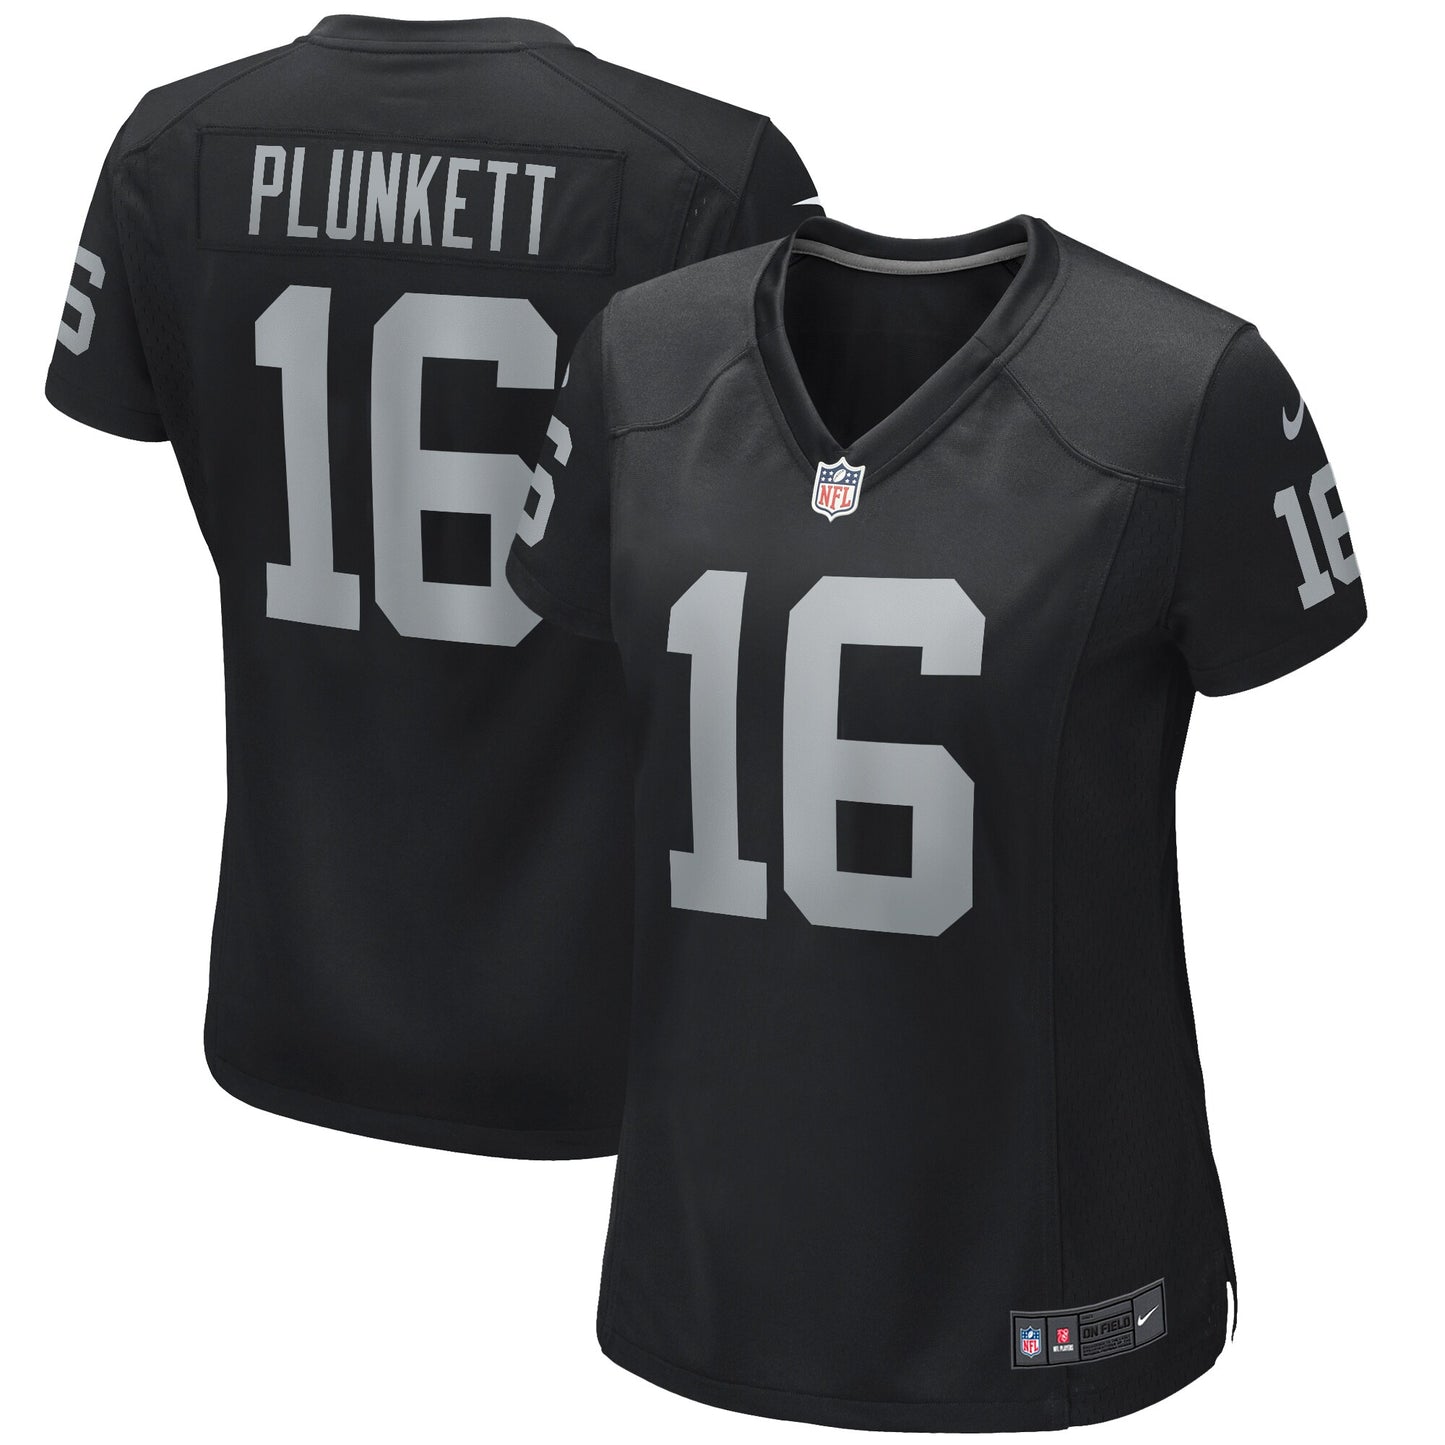 Jim Plunkett Las Vegas Raiders Nike Women's Game Retired Player Jersey - Black